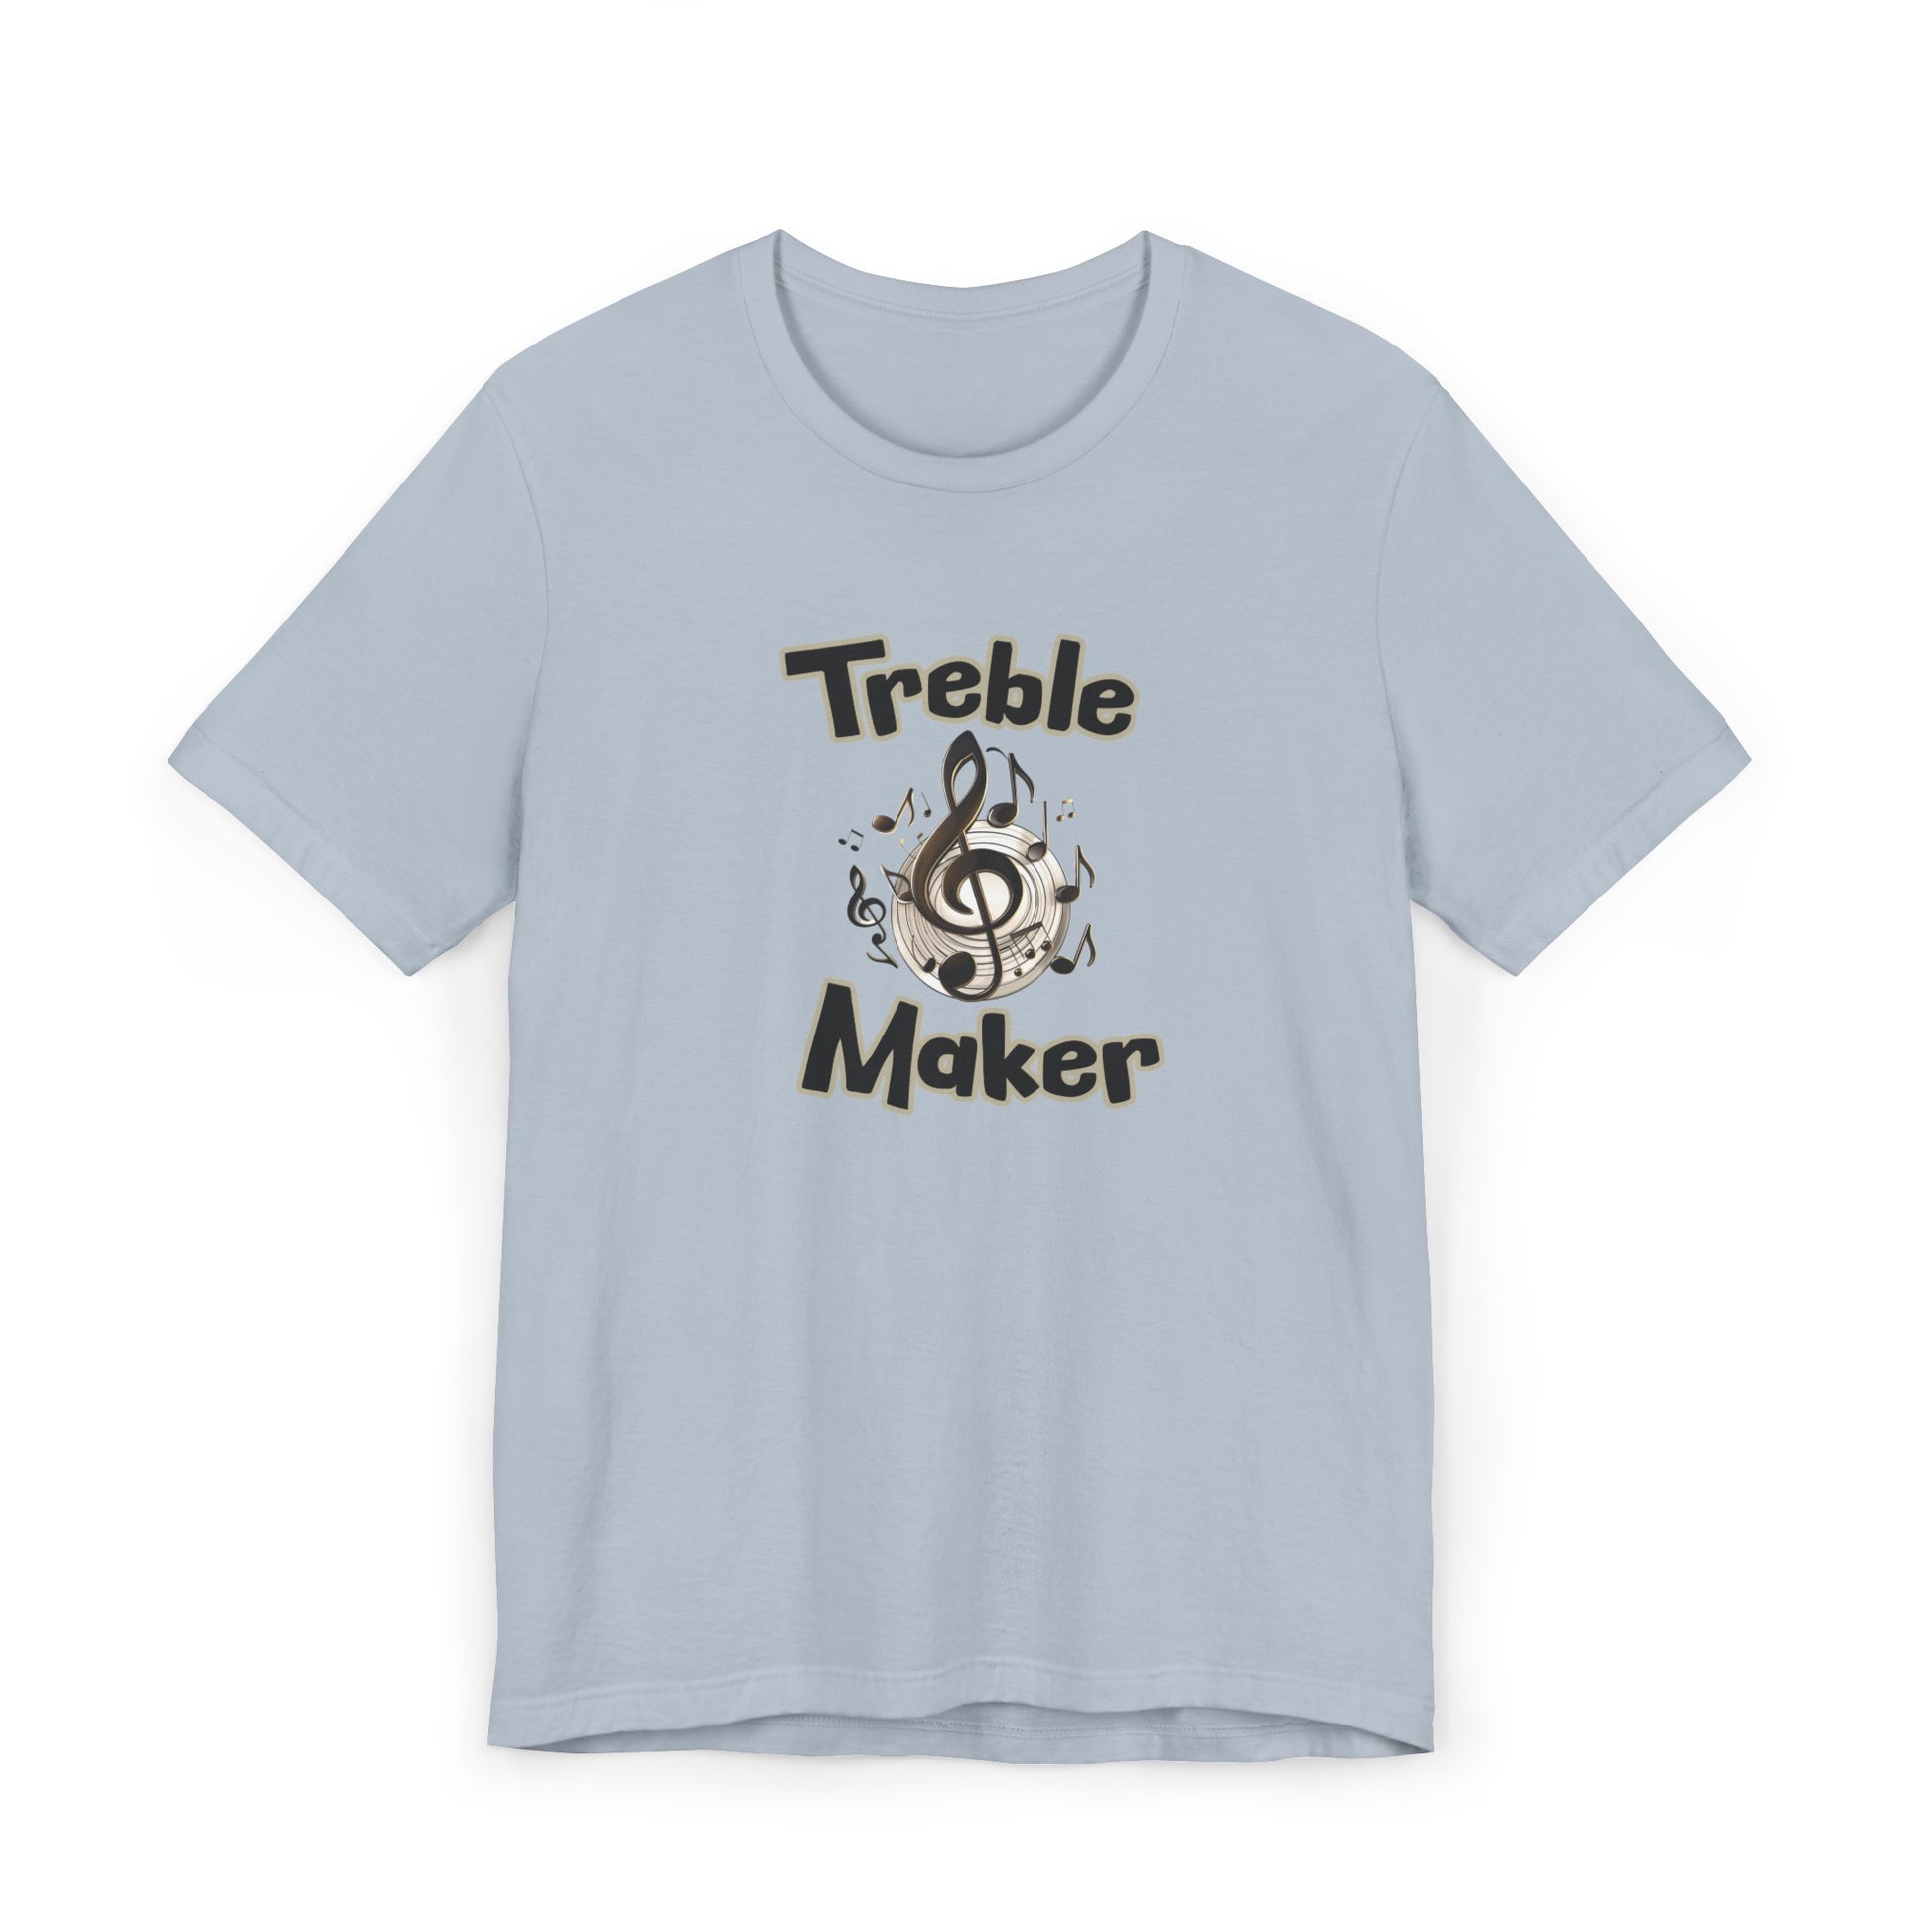 Treble Maker T-shirt in light blue color 